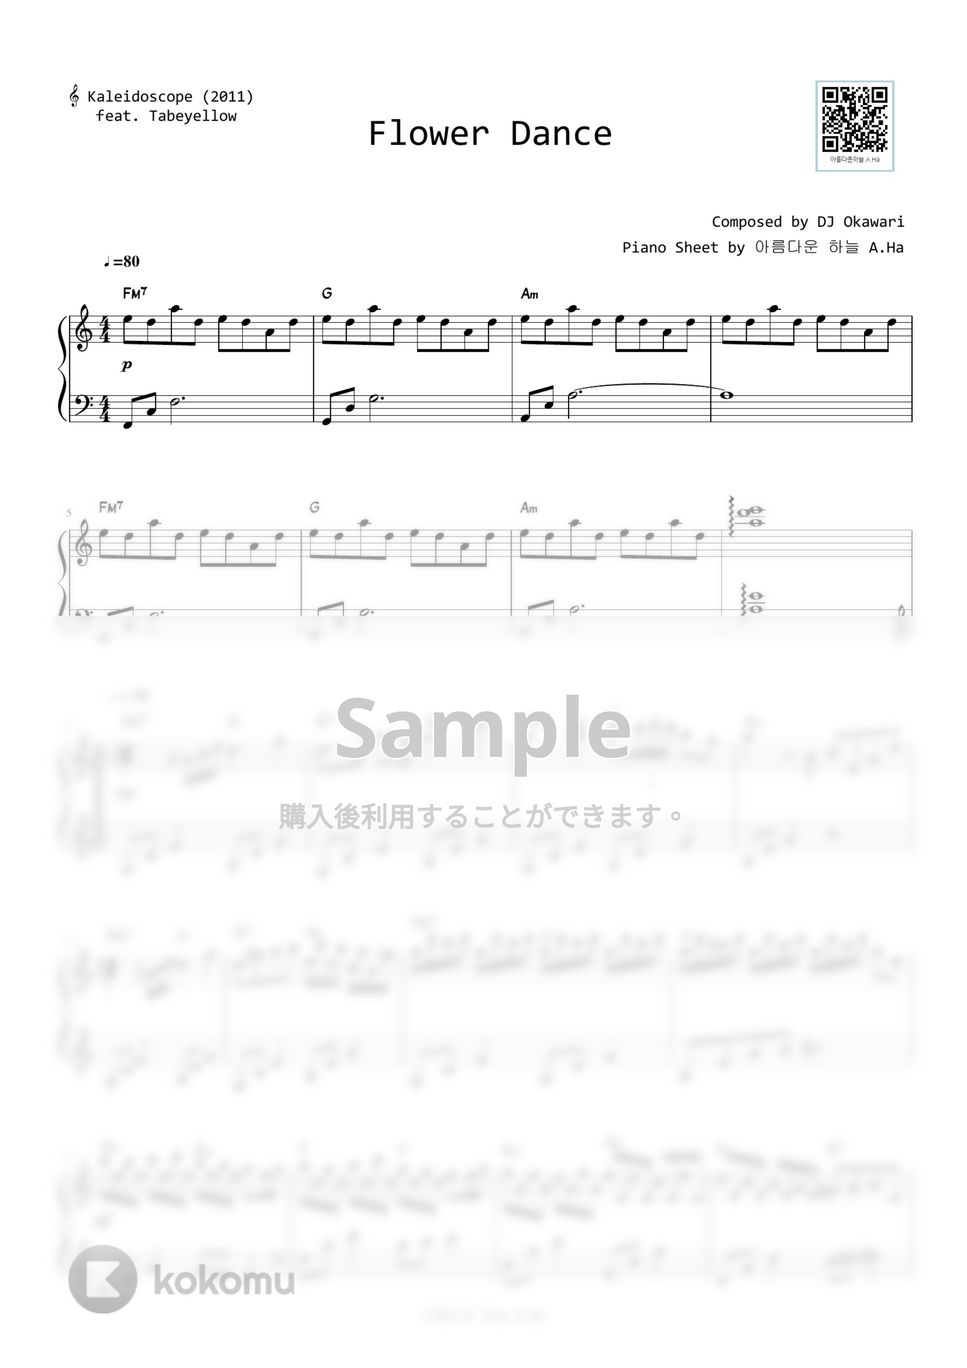 DJ OKAWARI - Flower Dance (Level 2 - Easy Key) by A.Ha